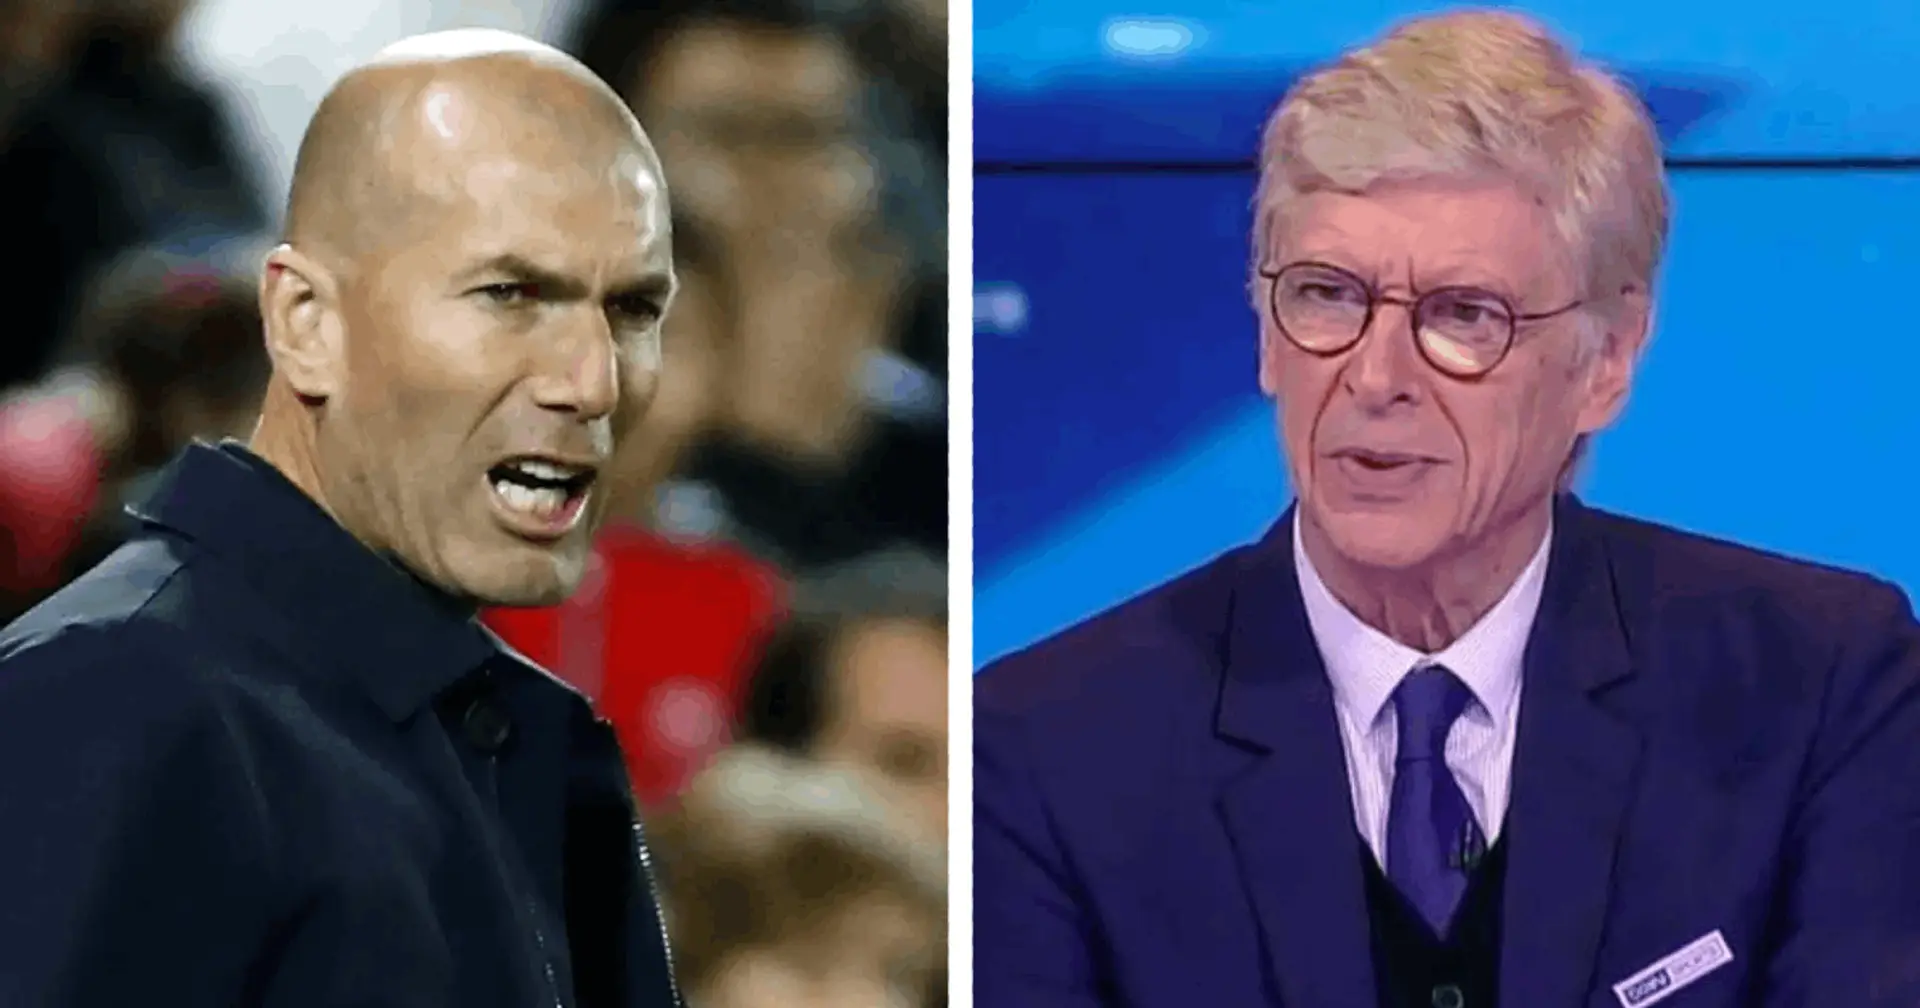 Wenger backs Zidane to take over at France & 3 more unpublished stories